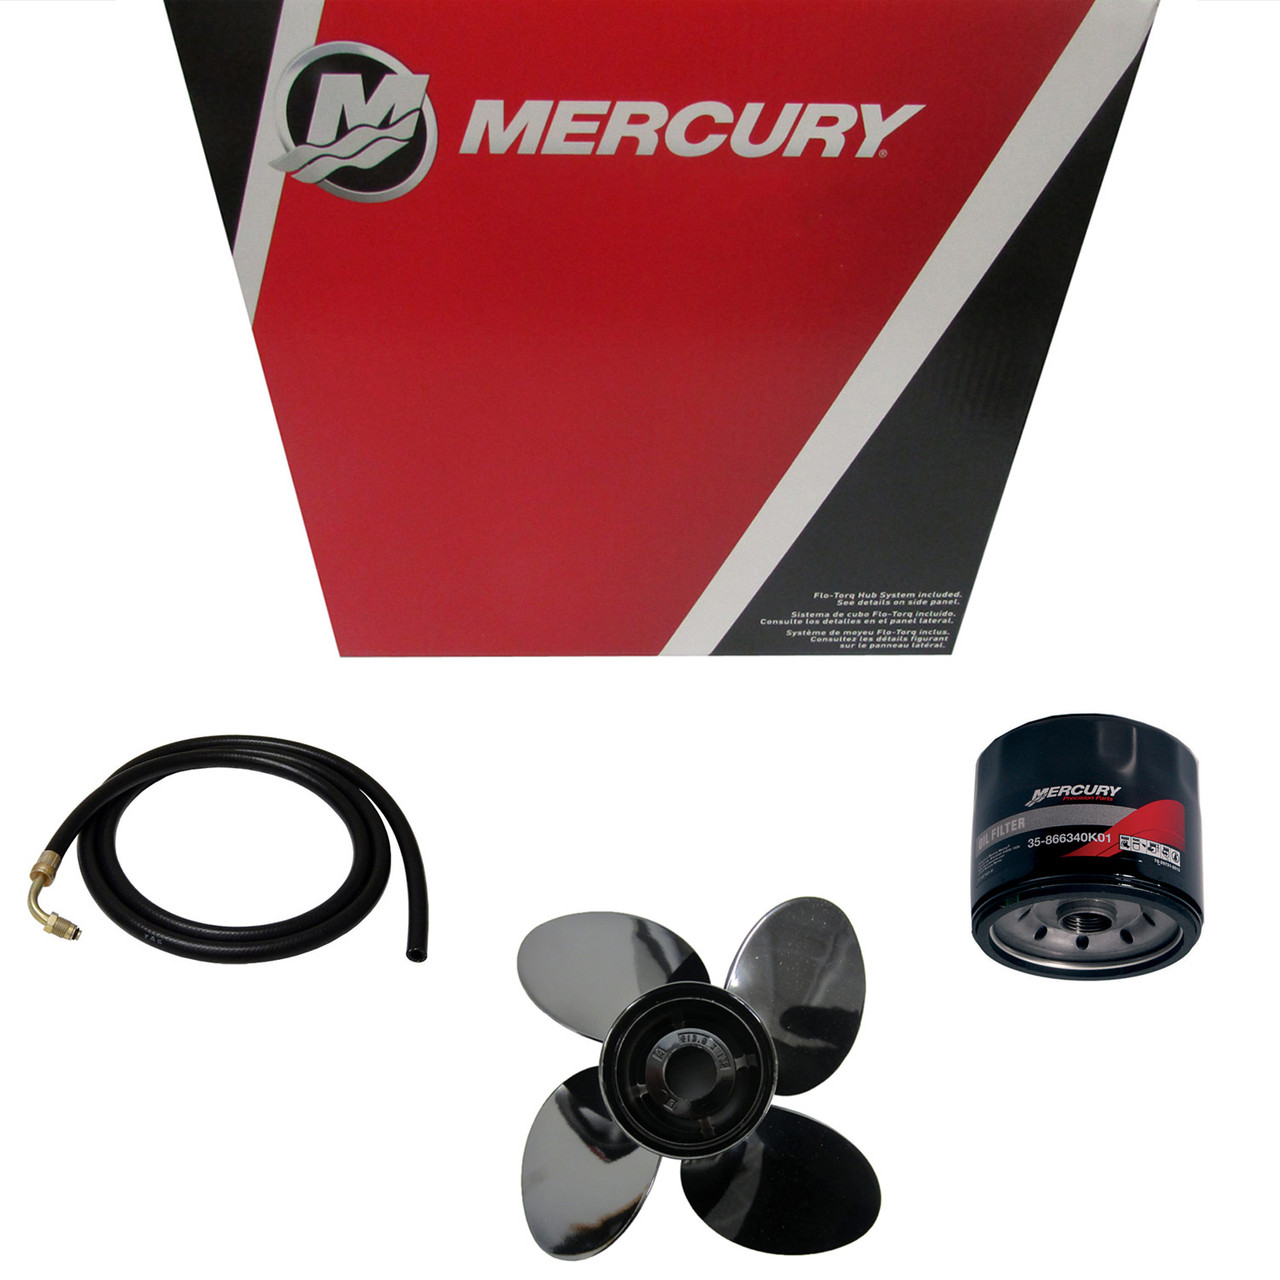 Mercury Marine / Mercruiser New OEM Solenoid Valve, 879194243